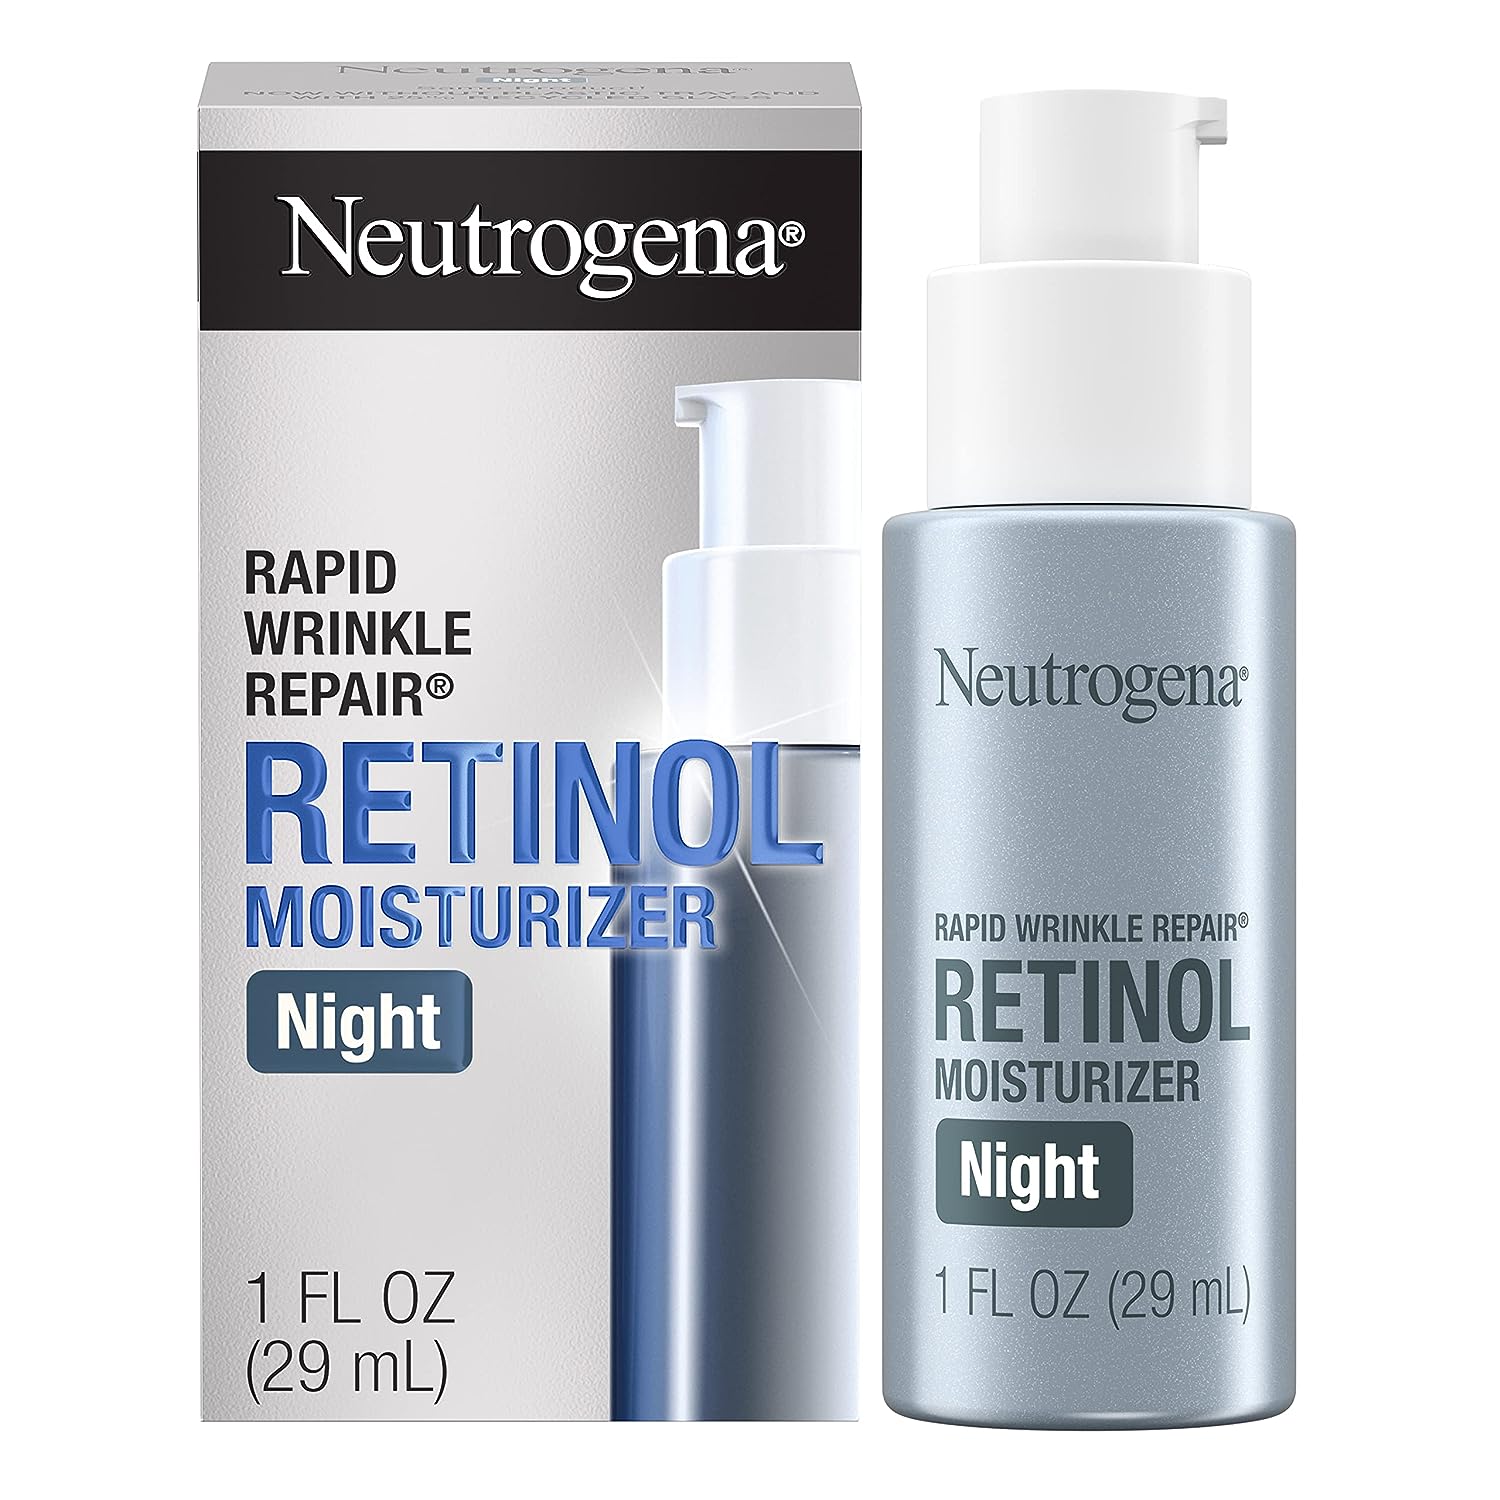 Neutrogena Rapid Wrinkle Repair Retinol Moisturizer (Night)